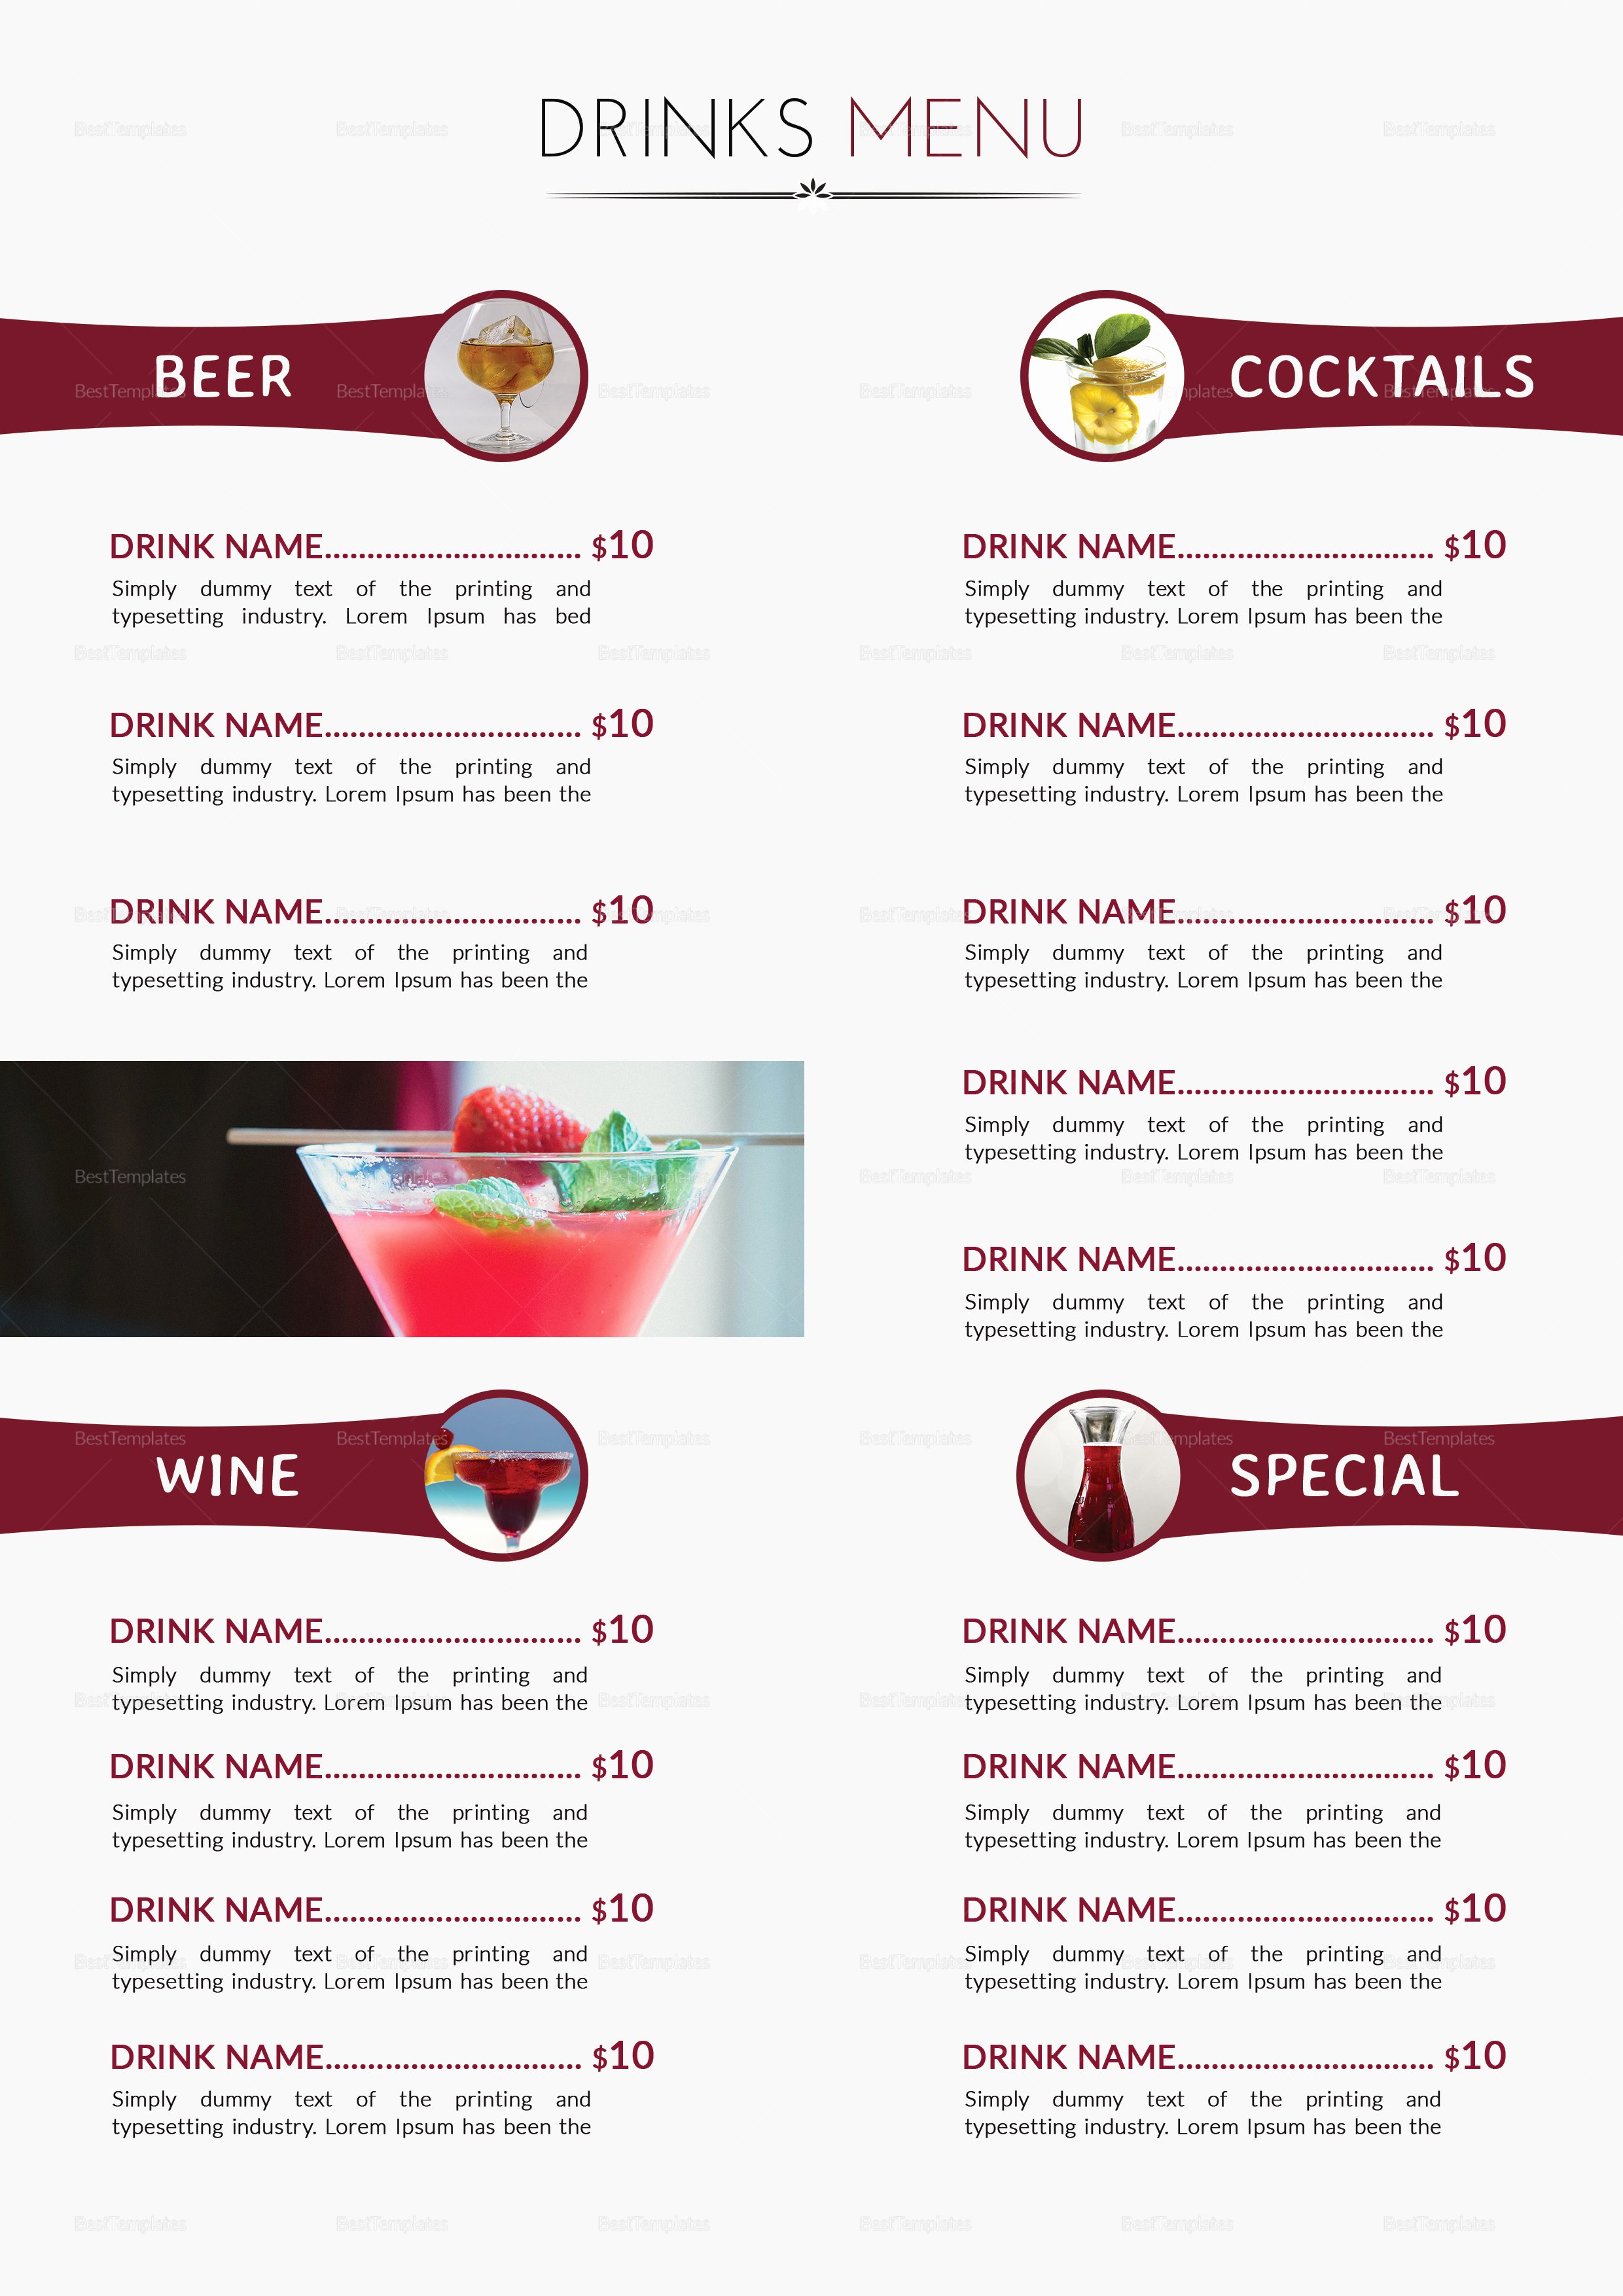 Free Drinks Menu Templates Beautiful Cocktail Drinks Menu Design Template In Psd Word Publisher